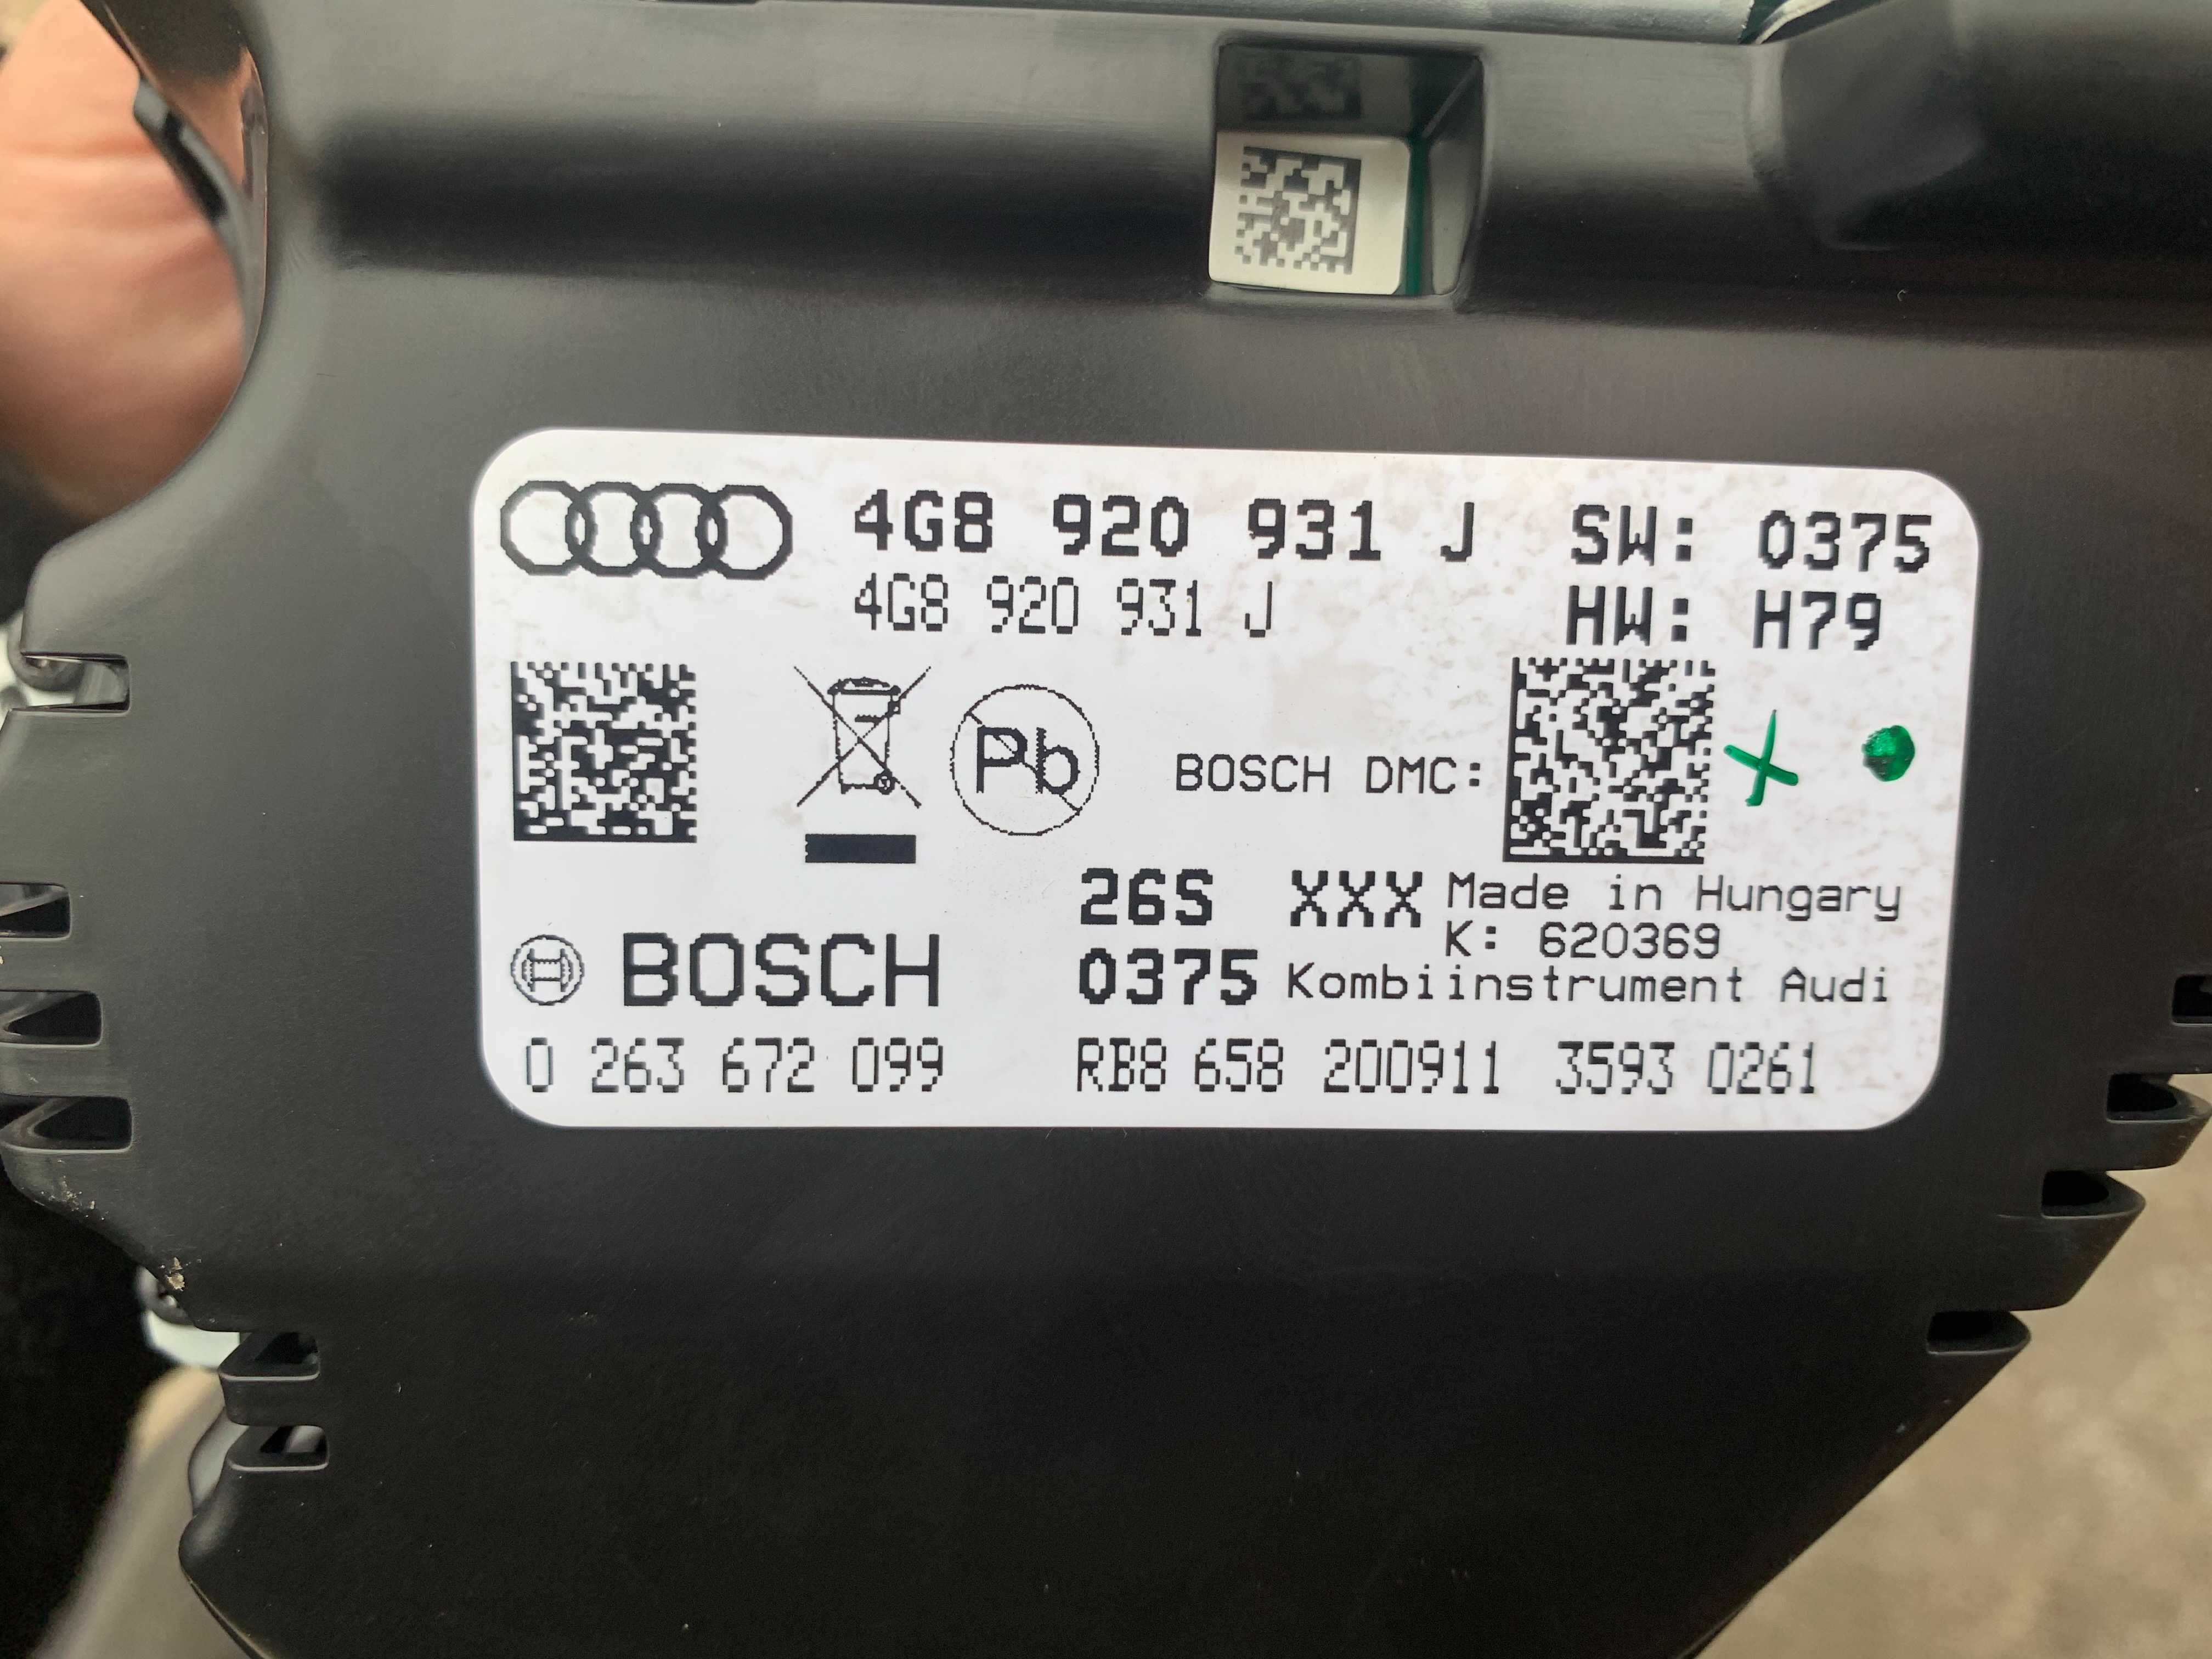 ceasuri bord cu ACC Audi A6 C7/A7 4G cod 4G8920931J